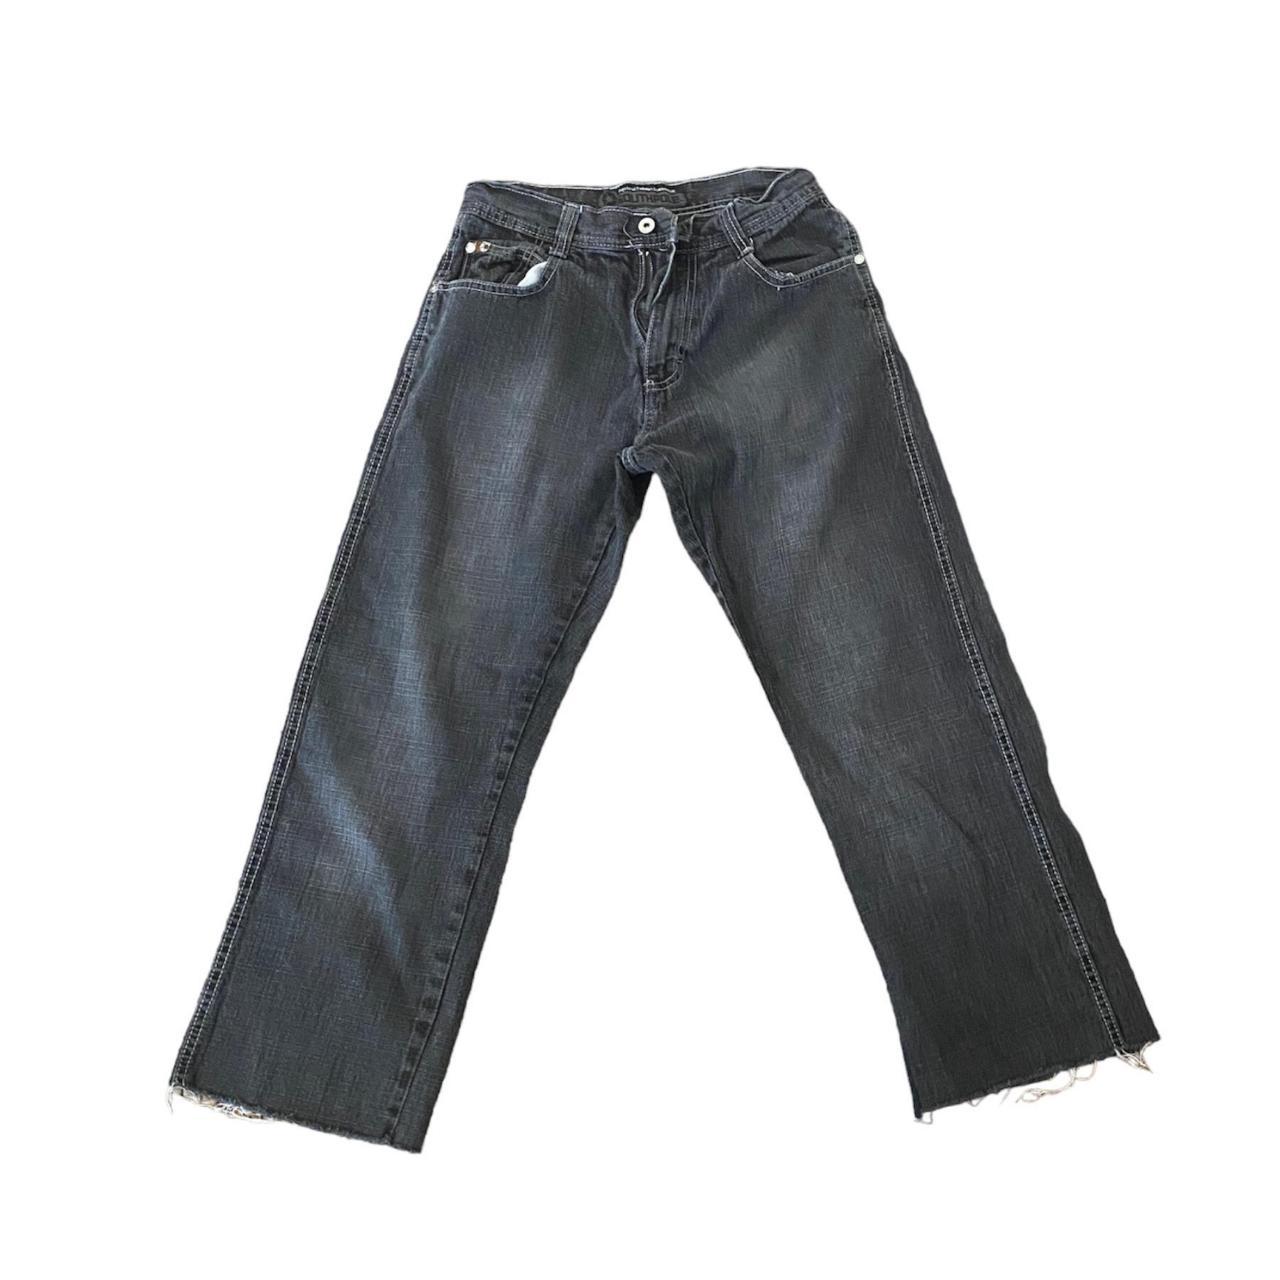 Southpole Men's Grey and Black Jeans | Depop